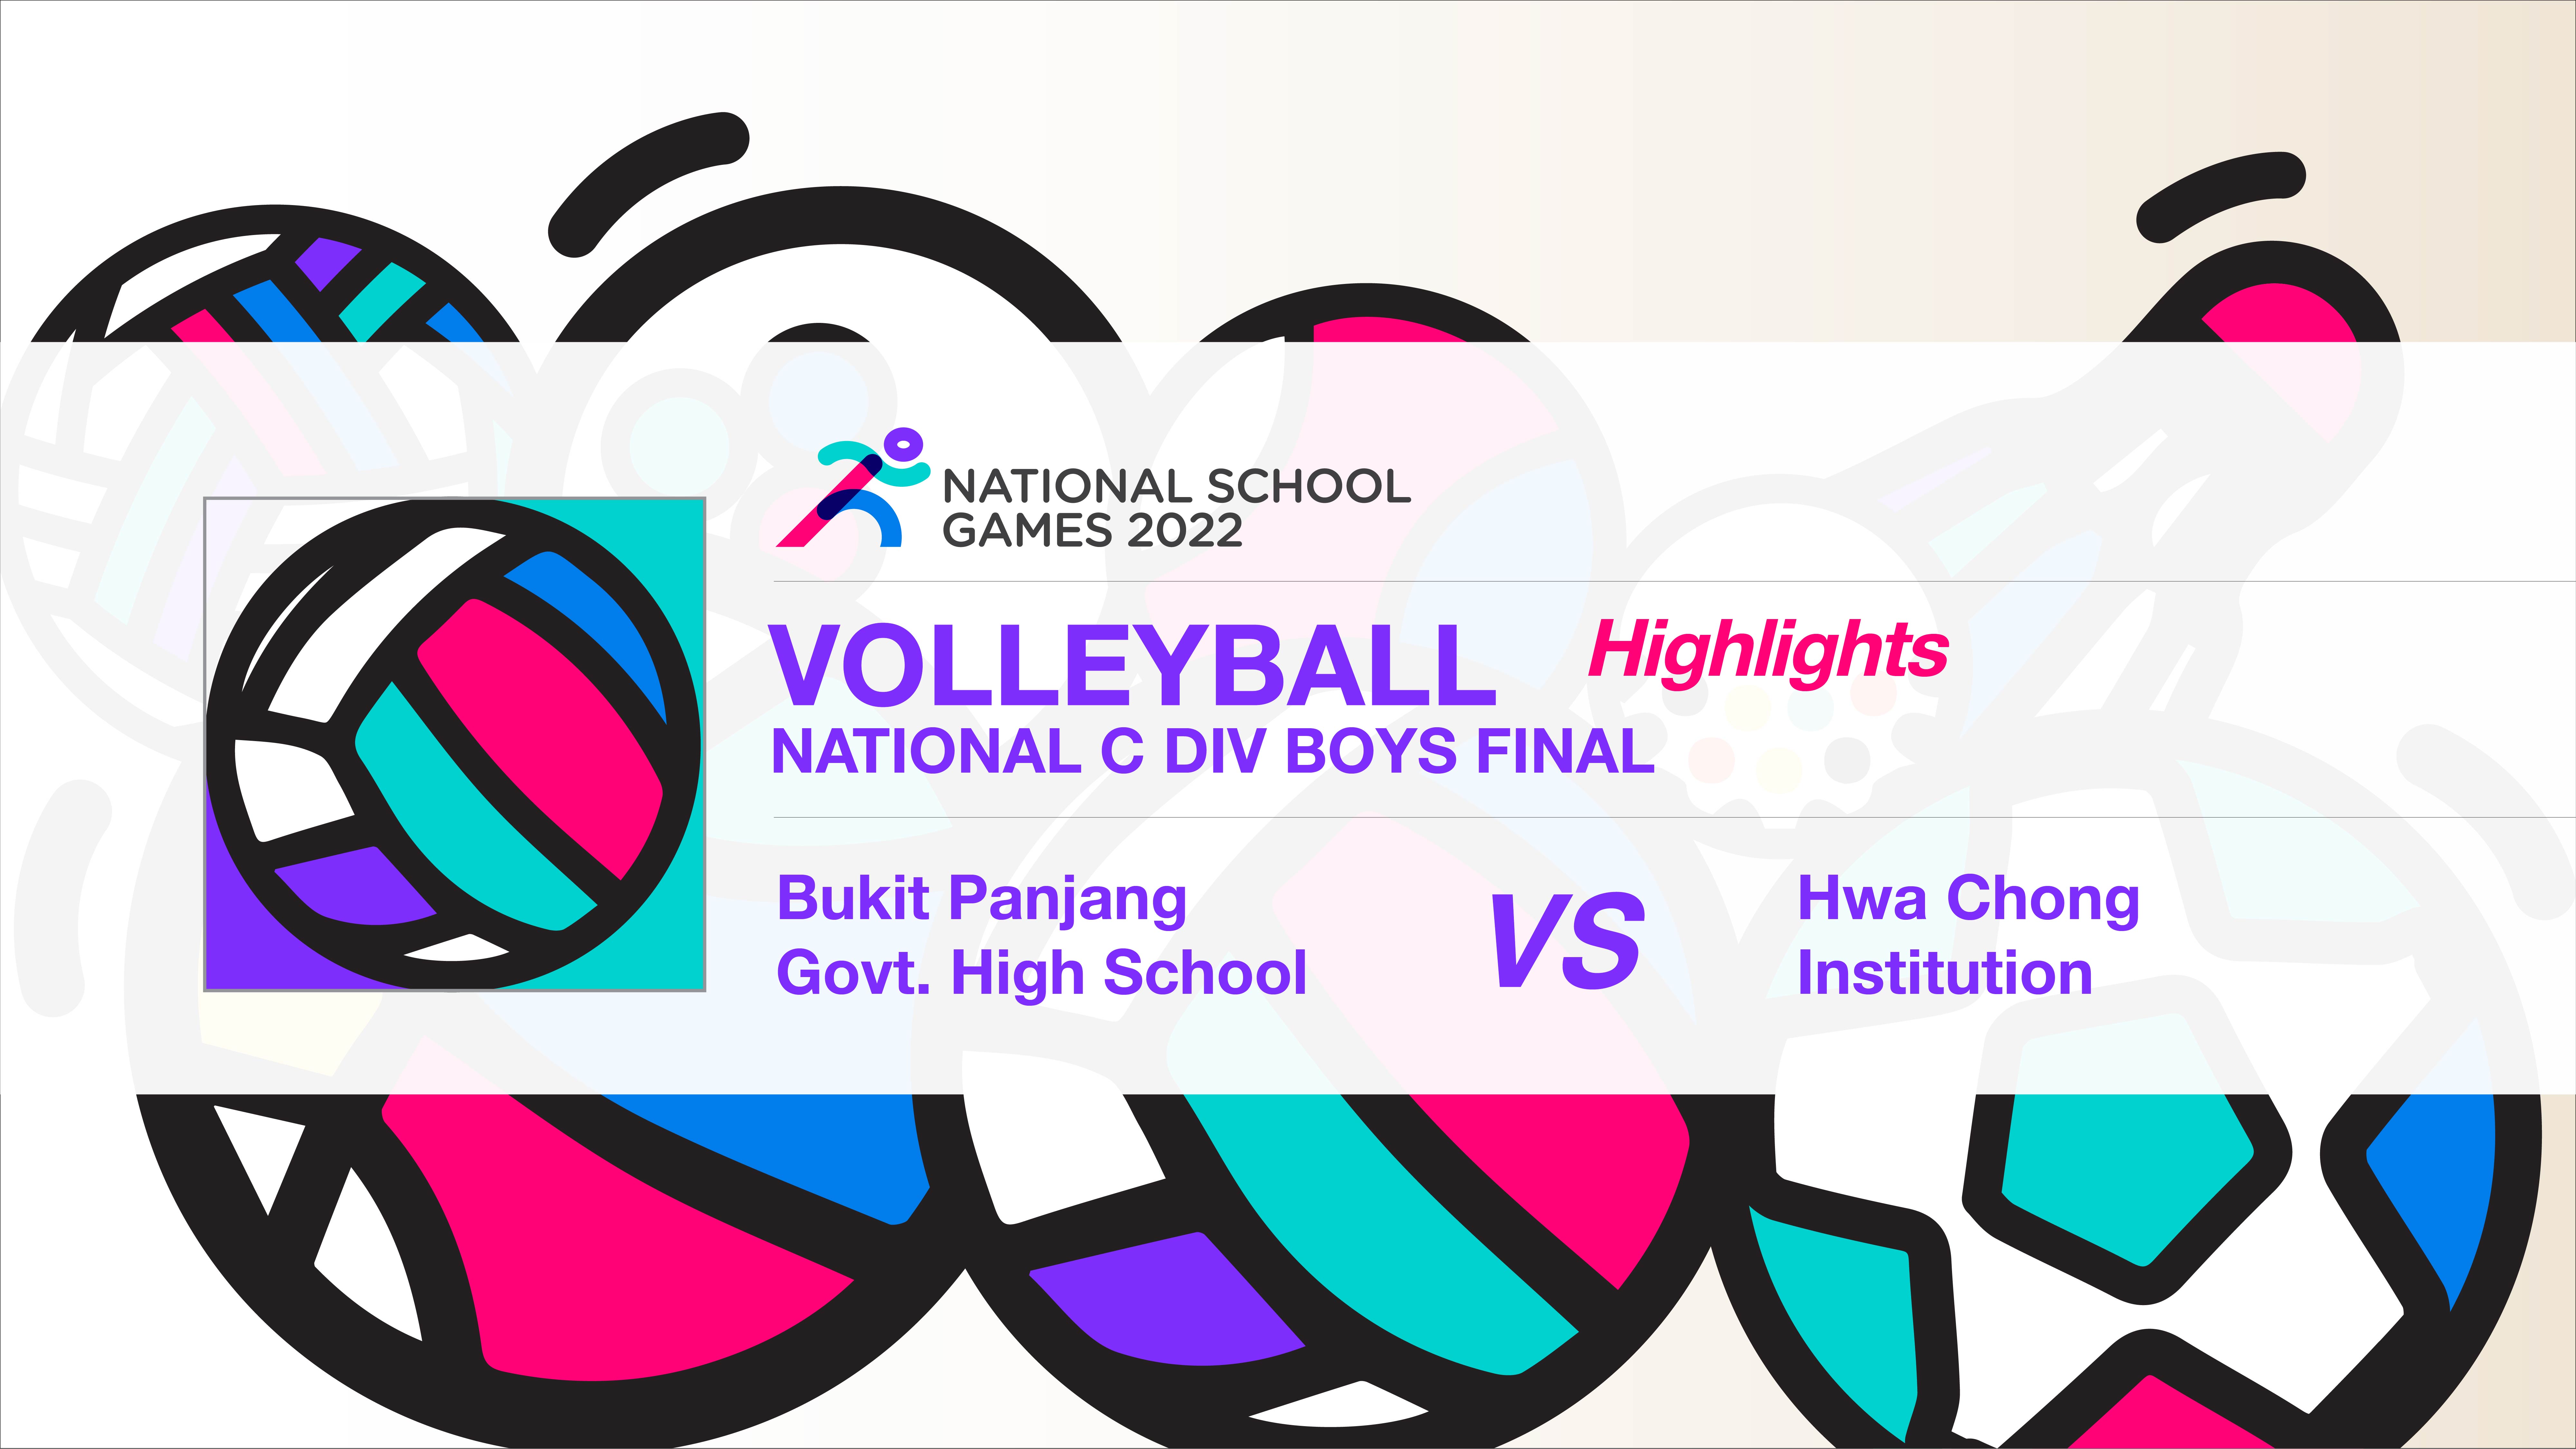 SSSC Volleyball National C Division Boys Final | Bukit Panjang Govt. High School vs Hwa Chong Institution - Highlights